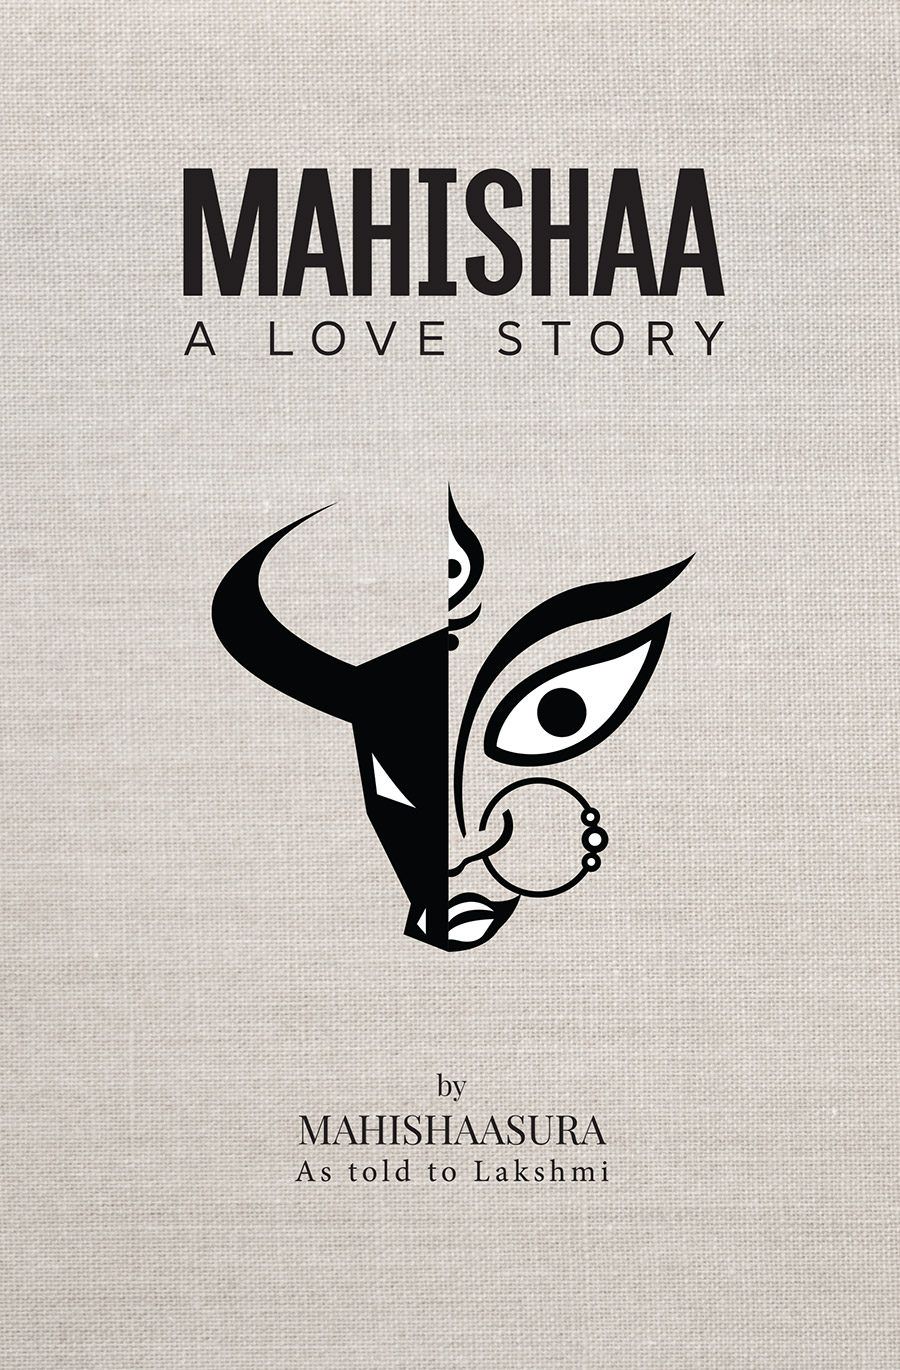 Mahishaa A Love Story